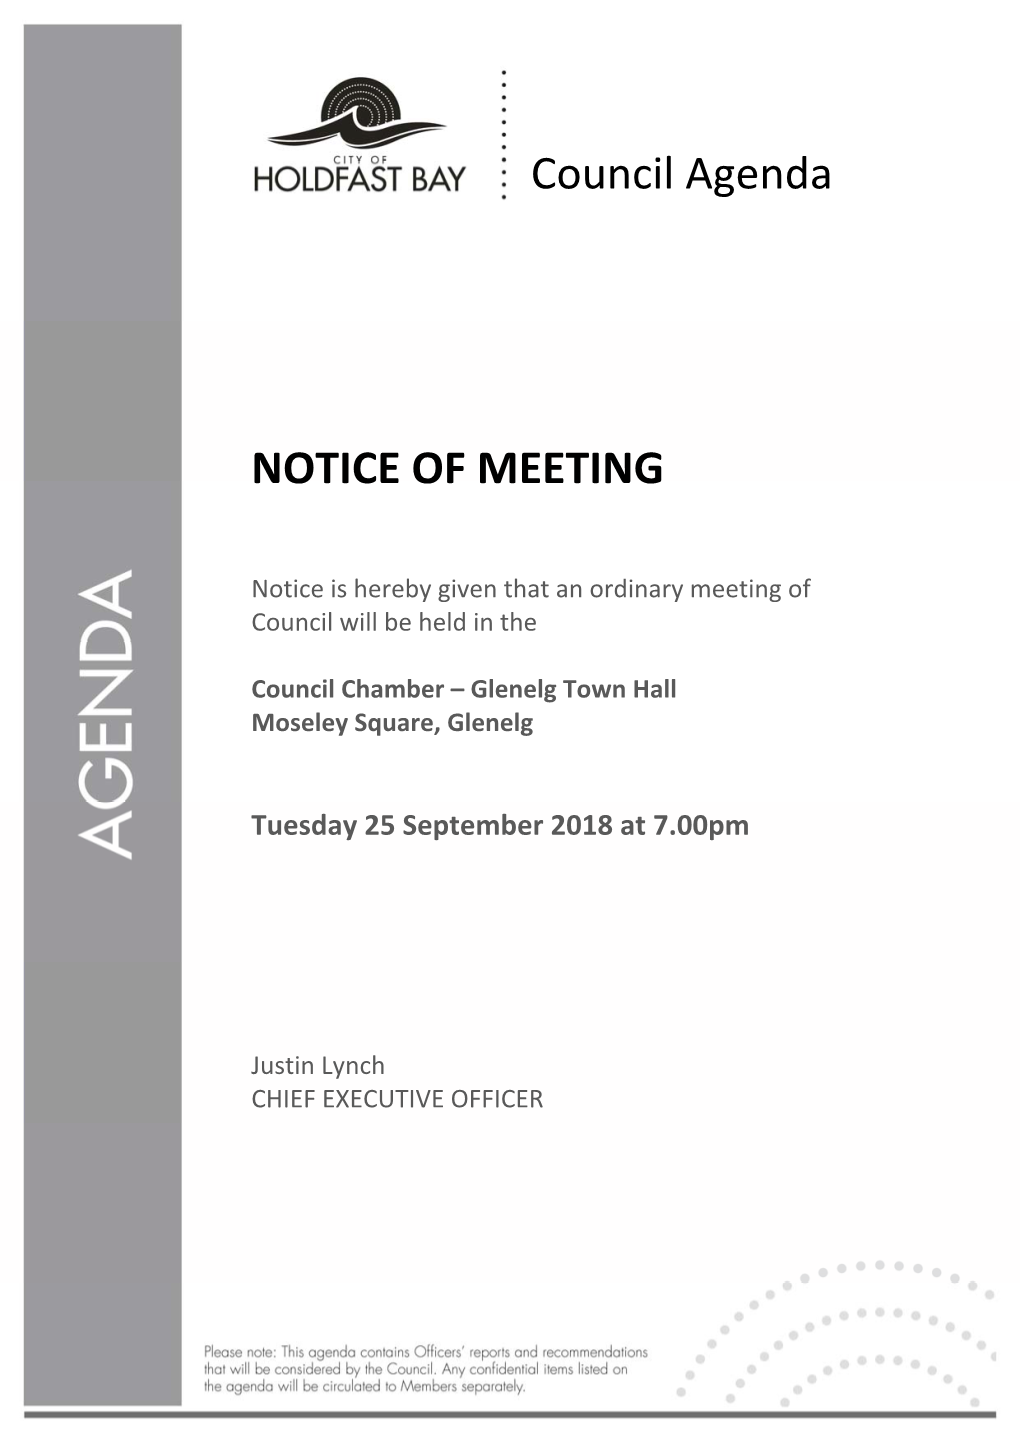 Council Agenda NOTICE of MEETING